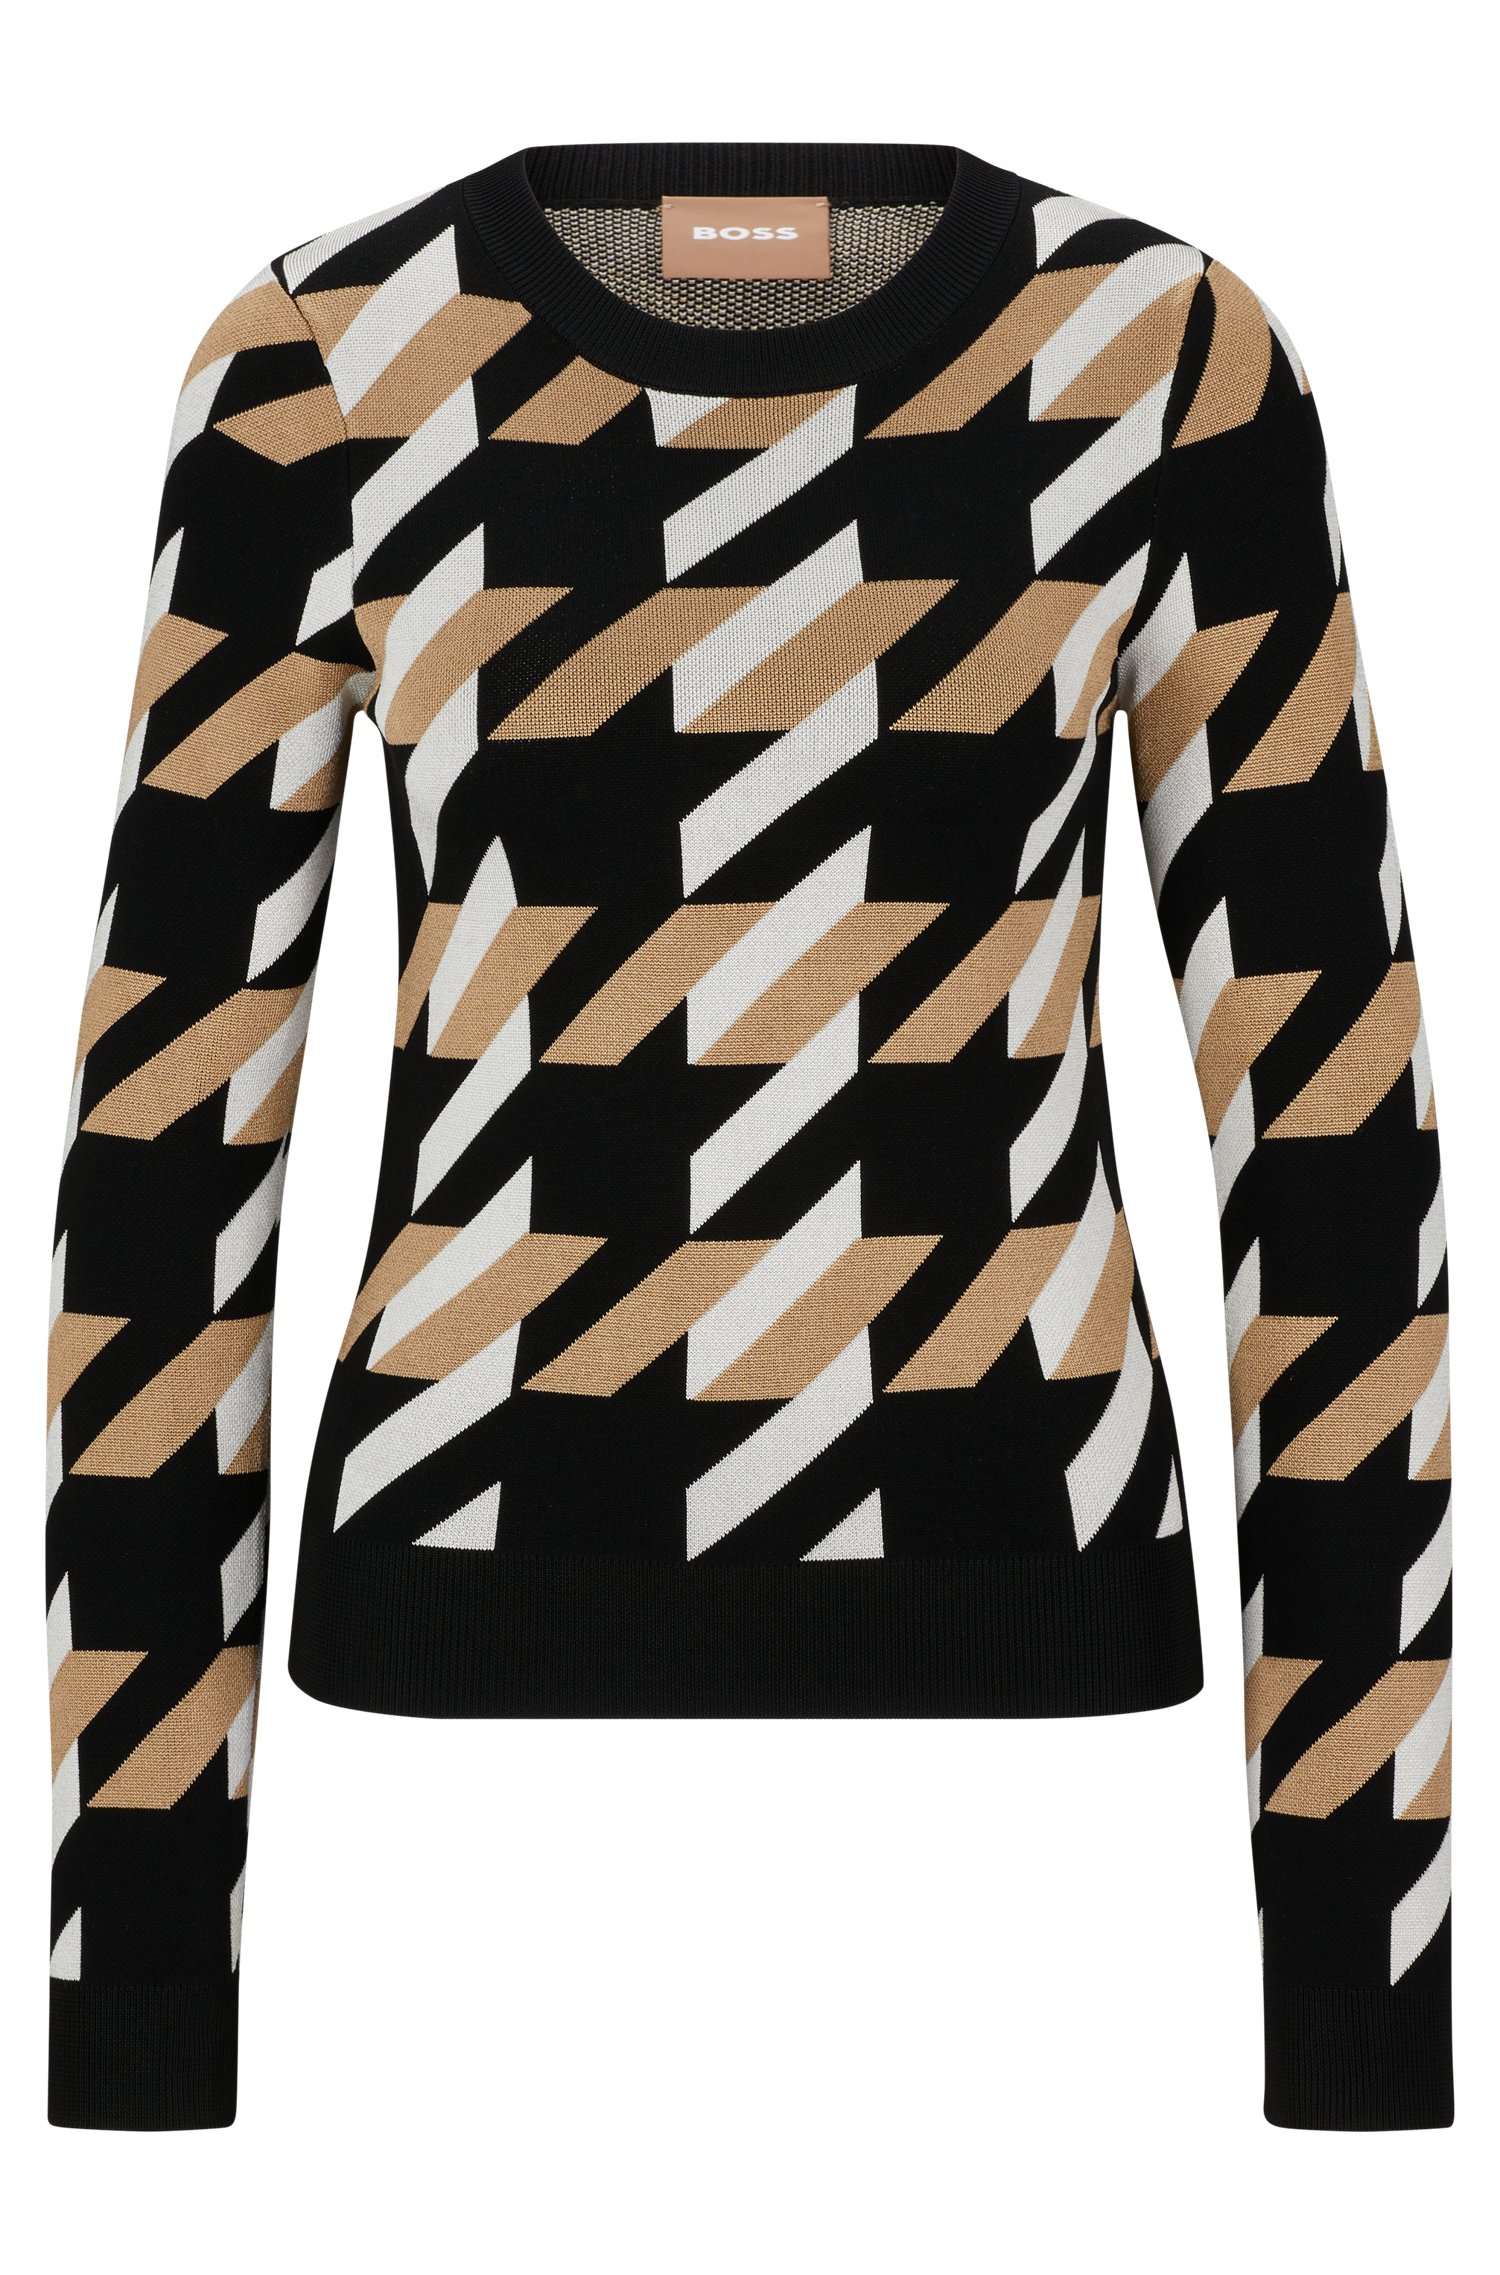 Джемпер Hugo Boss Knitted Jacquard-pattern With Logo Trim, мультиколор джемперы boss джемпер z patch